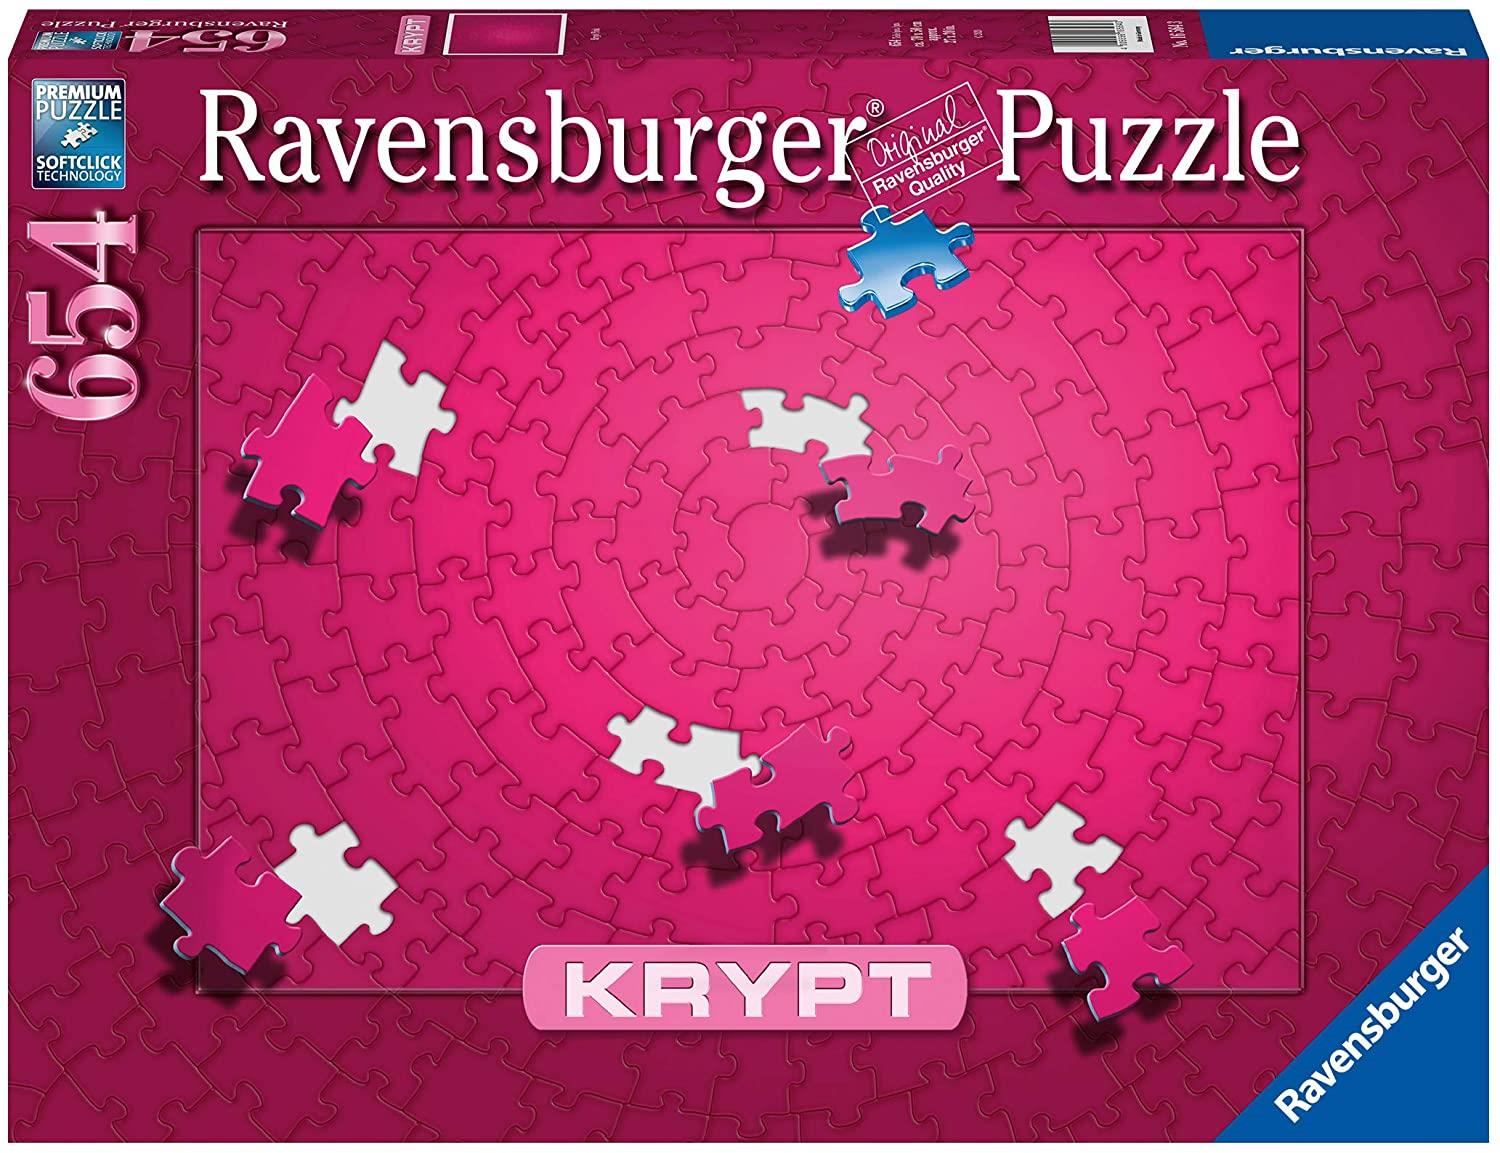 Ravensburger Krypt Pink Jigsaw Puzzle (654 Pieces)